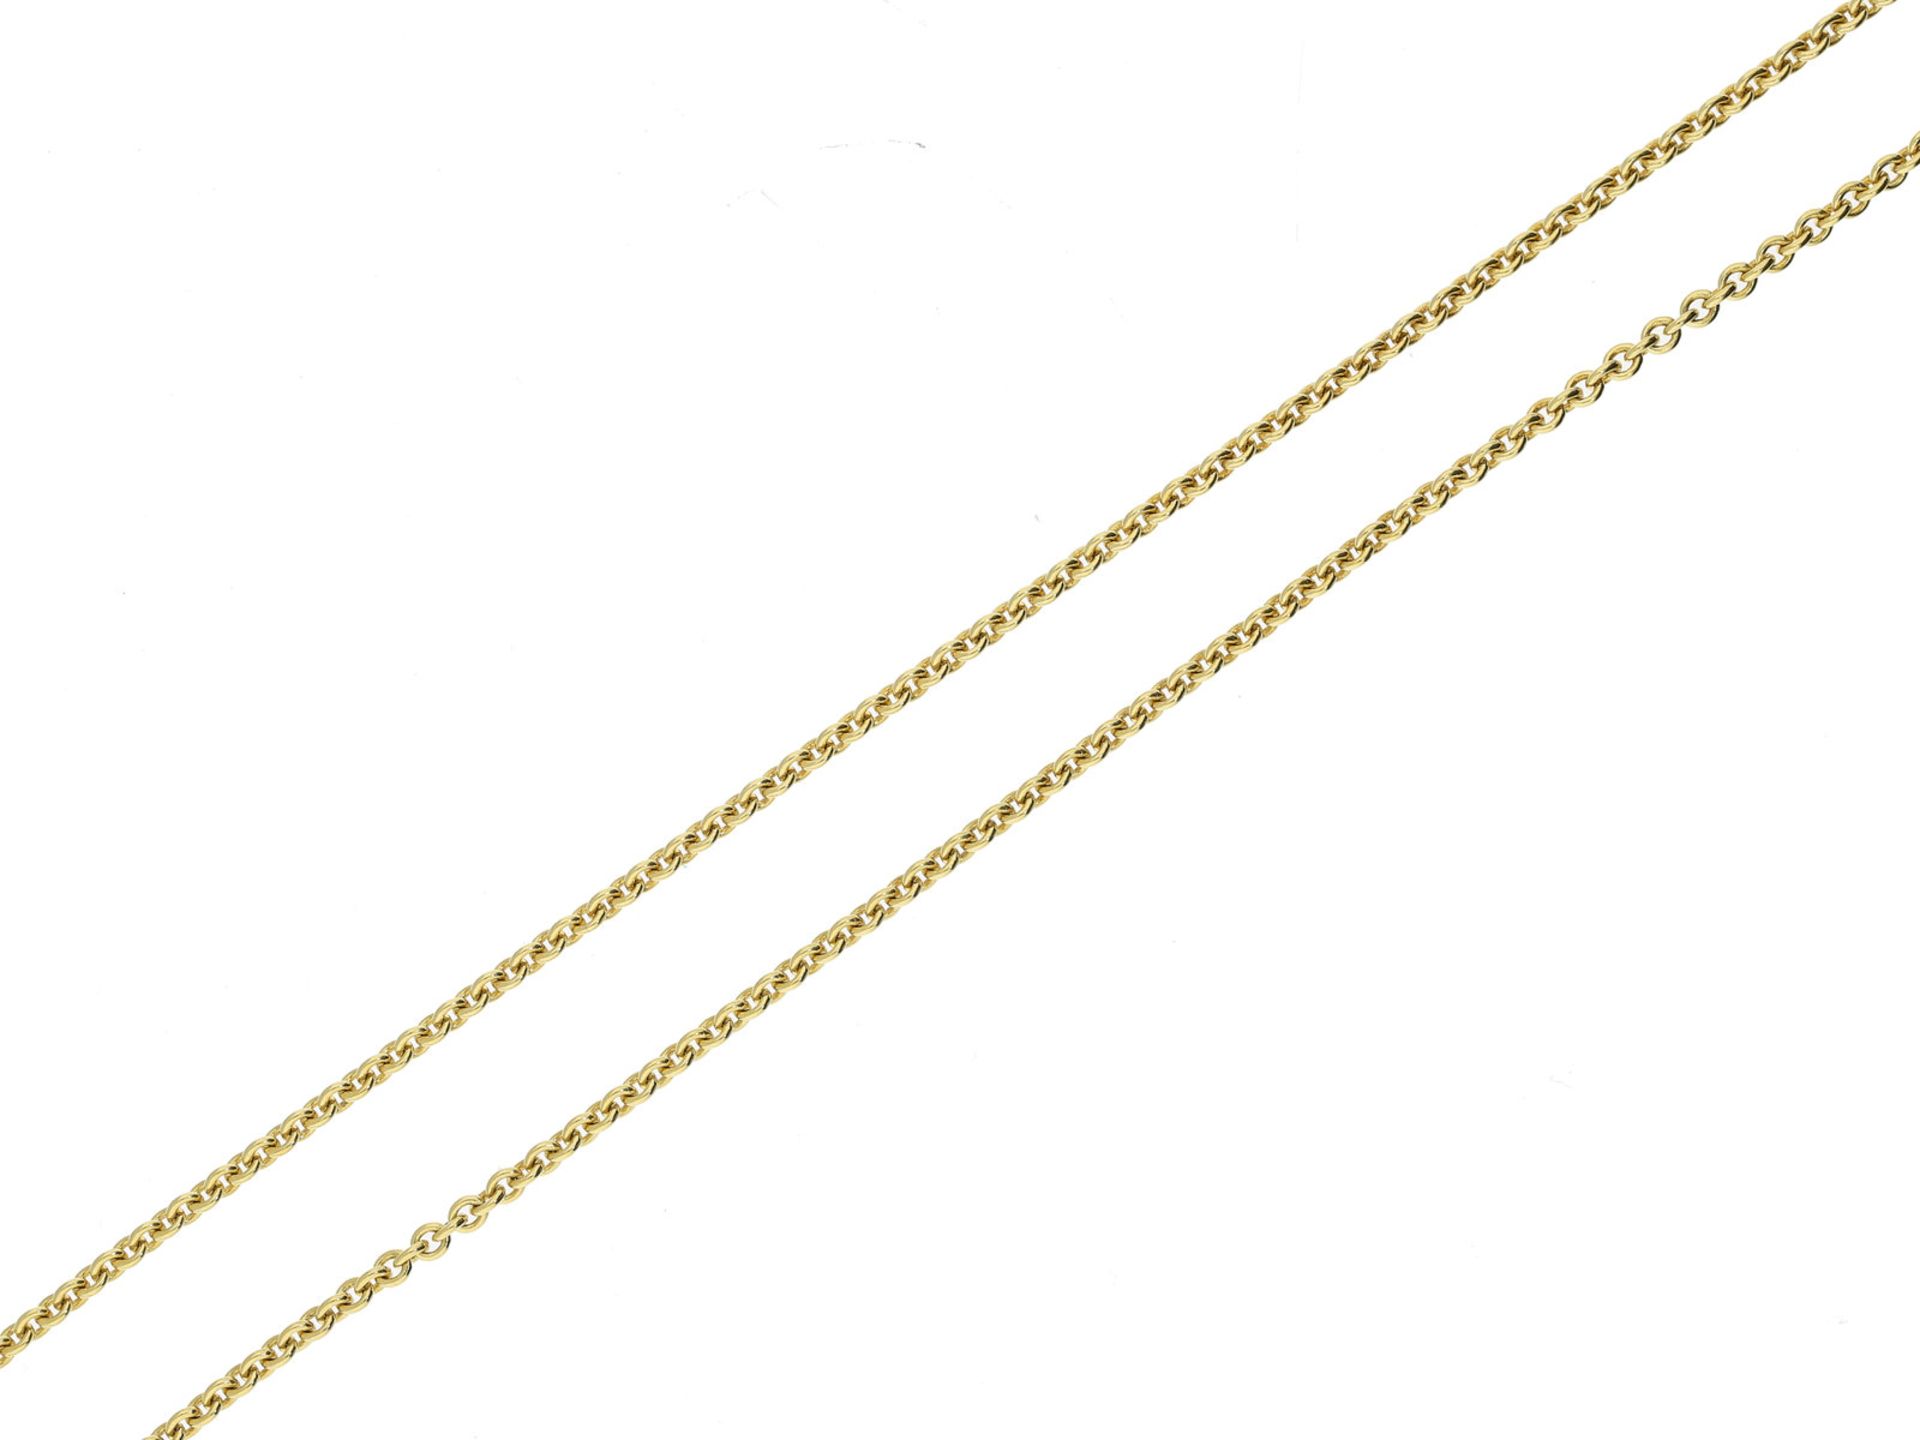 Kette/Collier: feine Collierkette aus 14K GoldCa. 55cm lang, ca. 6,3g, 14K Gelbgold,